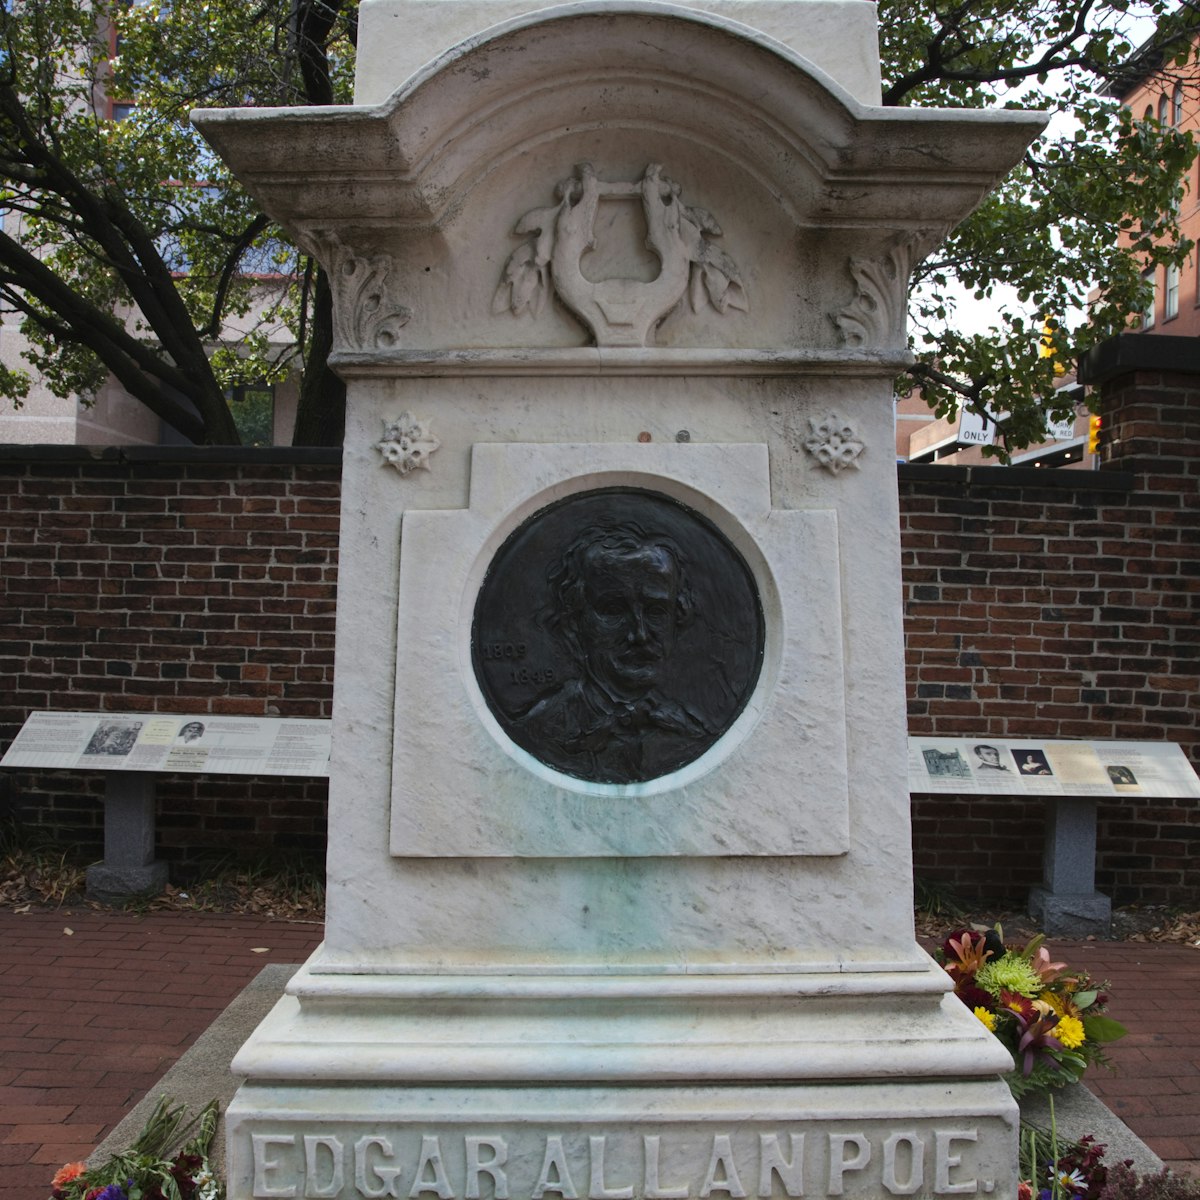 Grave of Edgar Allan Poe in Baltimore, Maryland.